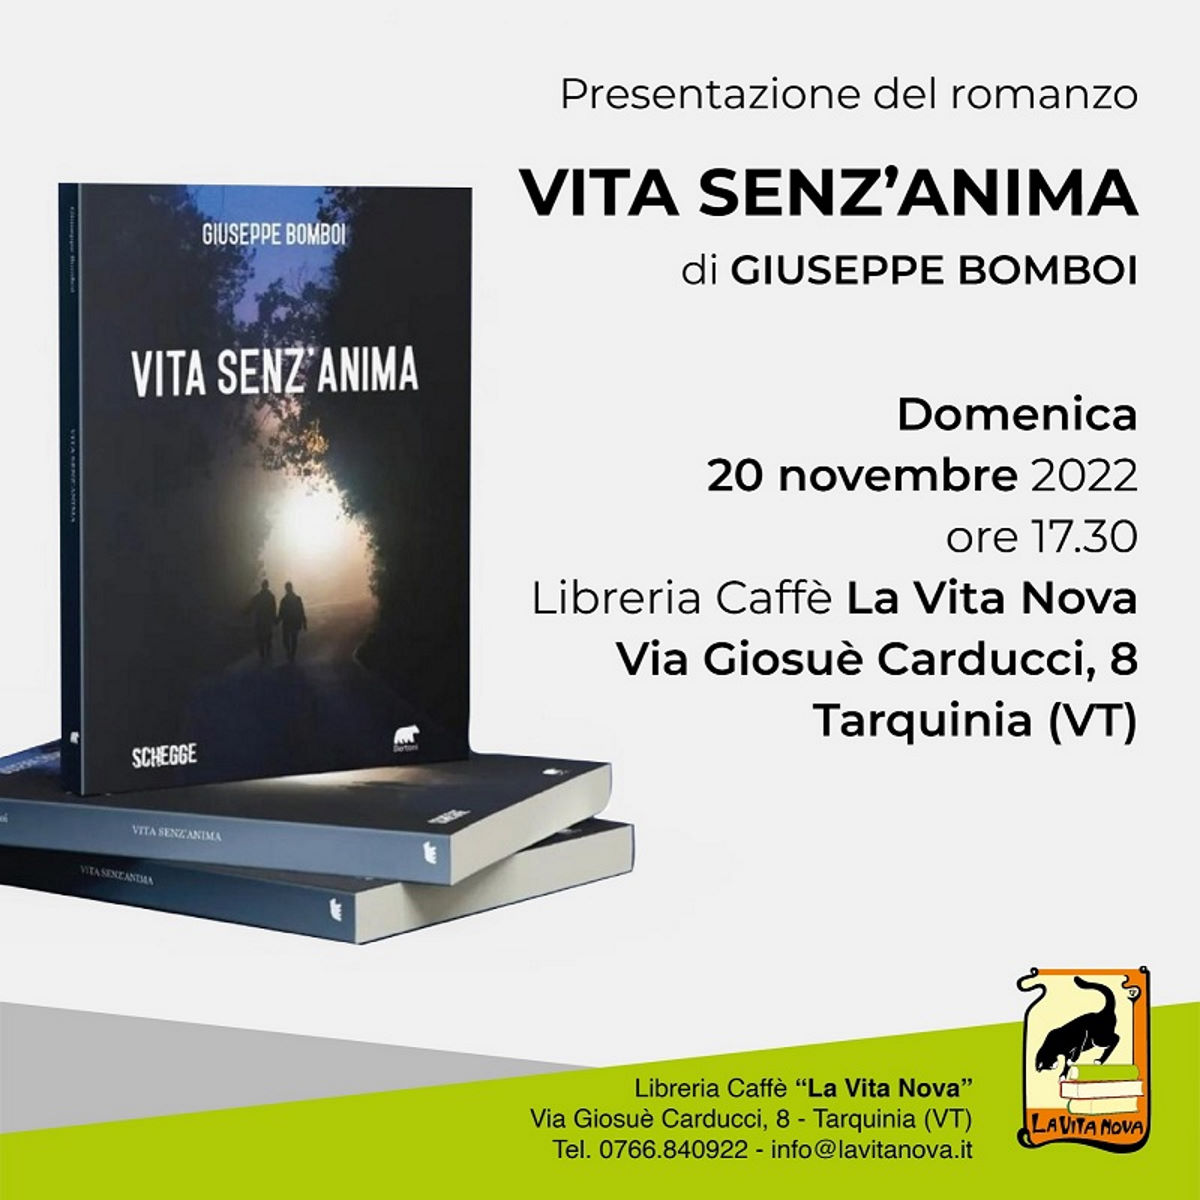 Tarquinia: La Vita Nova - Libreria Caffè, domenica 20 novembre ospita Vita senz'anima di Giuseppe Bomboi